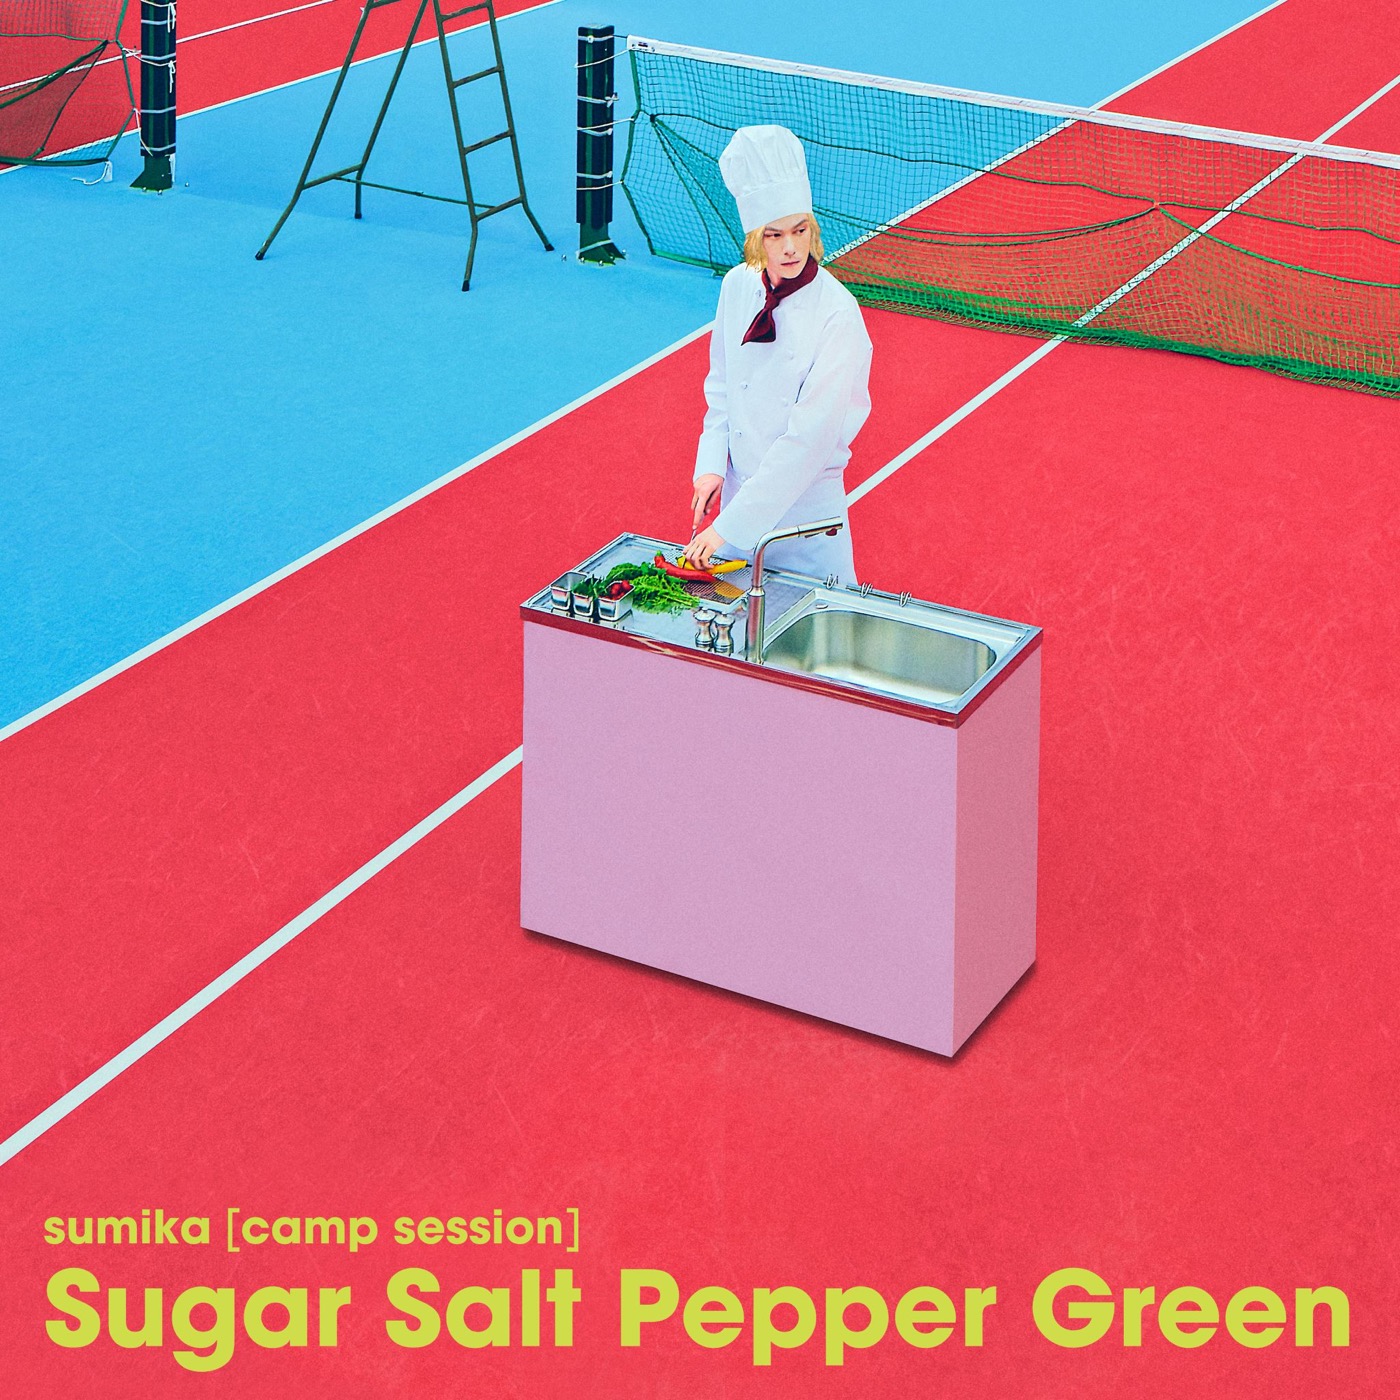 sumika、“sumika［camp session］”名義のミニアルバム『Sugar Salt Pepper Green』を完全生産限定盤アナログレコードでリリース - 画像一覧（1/2）